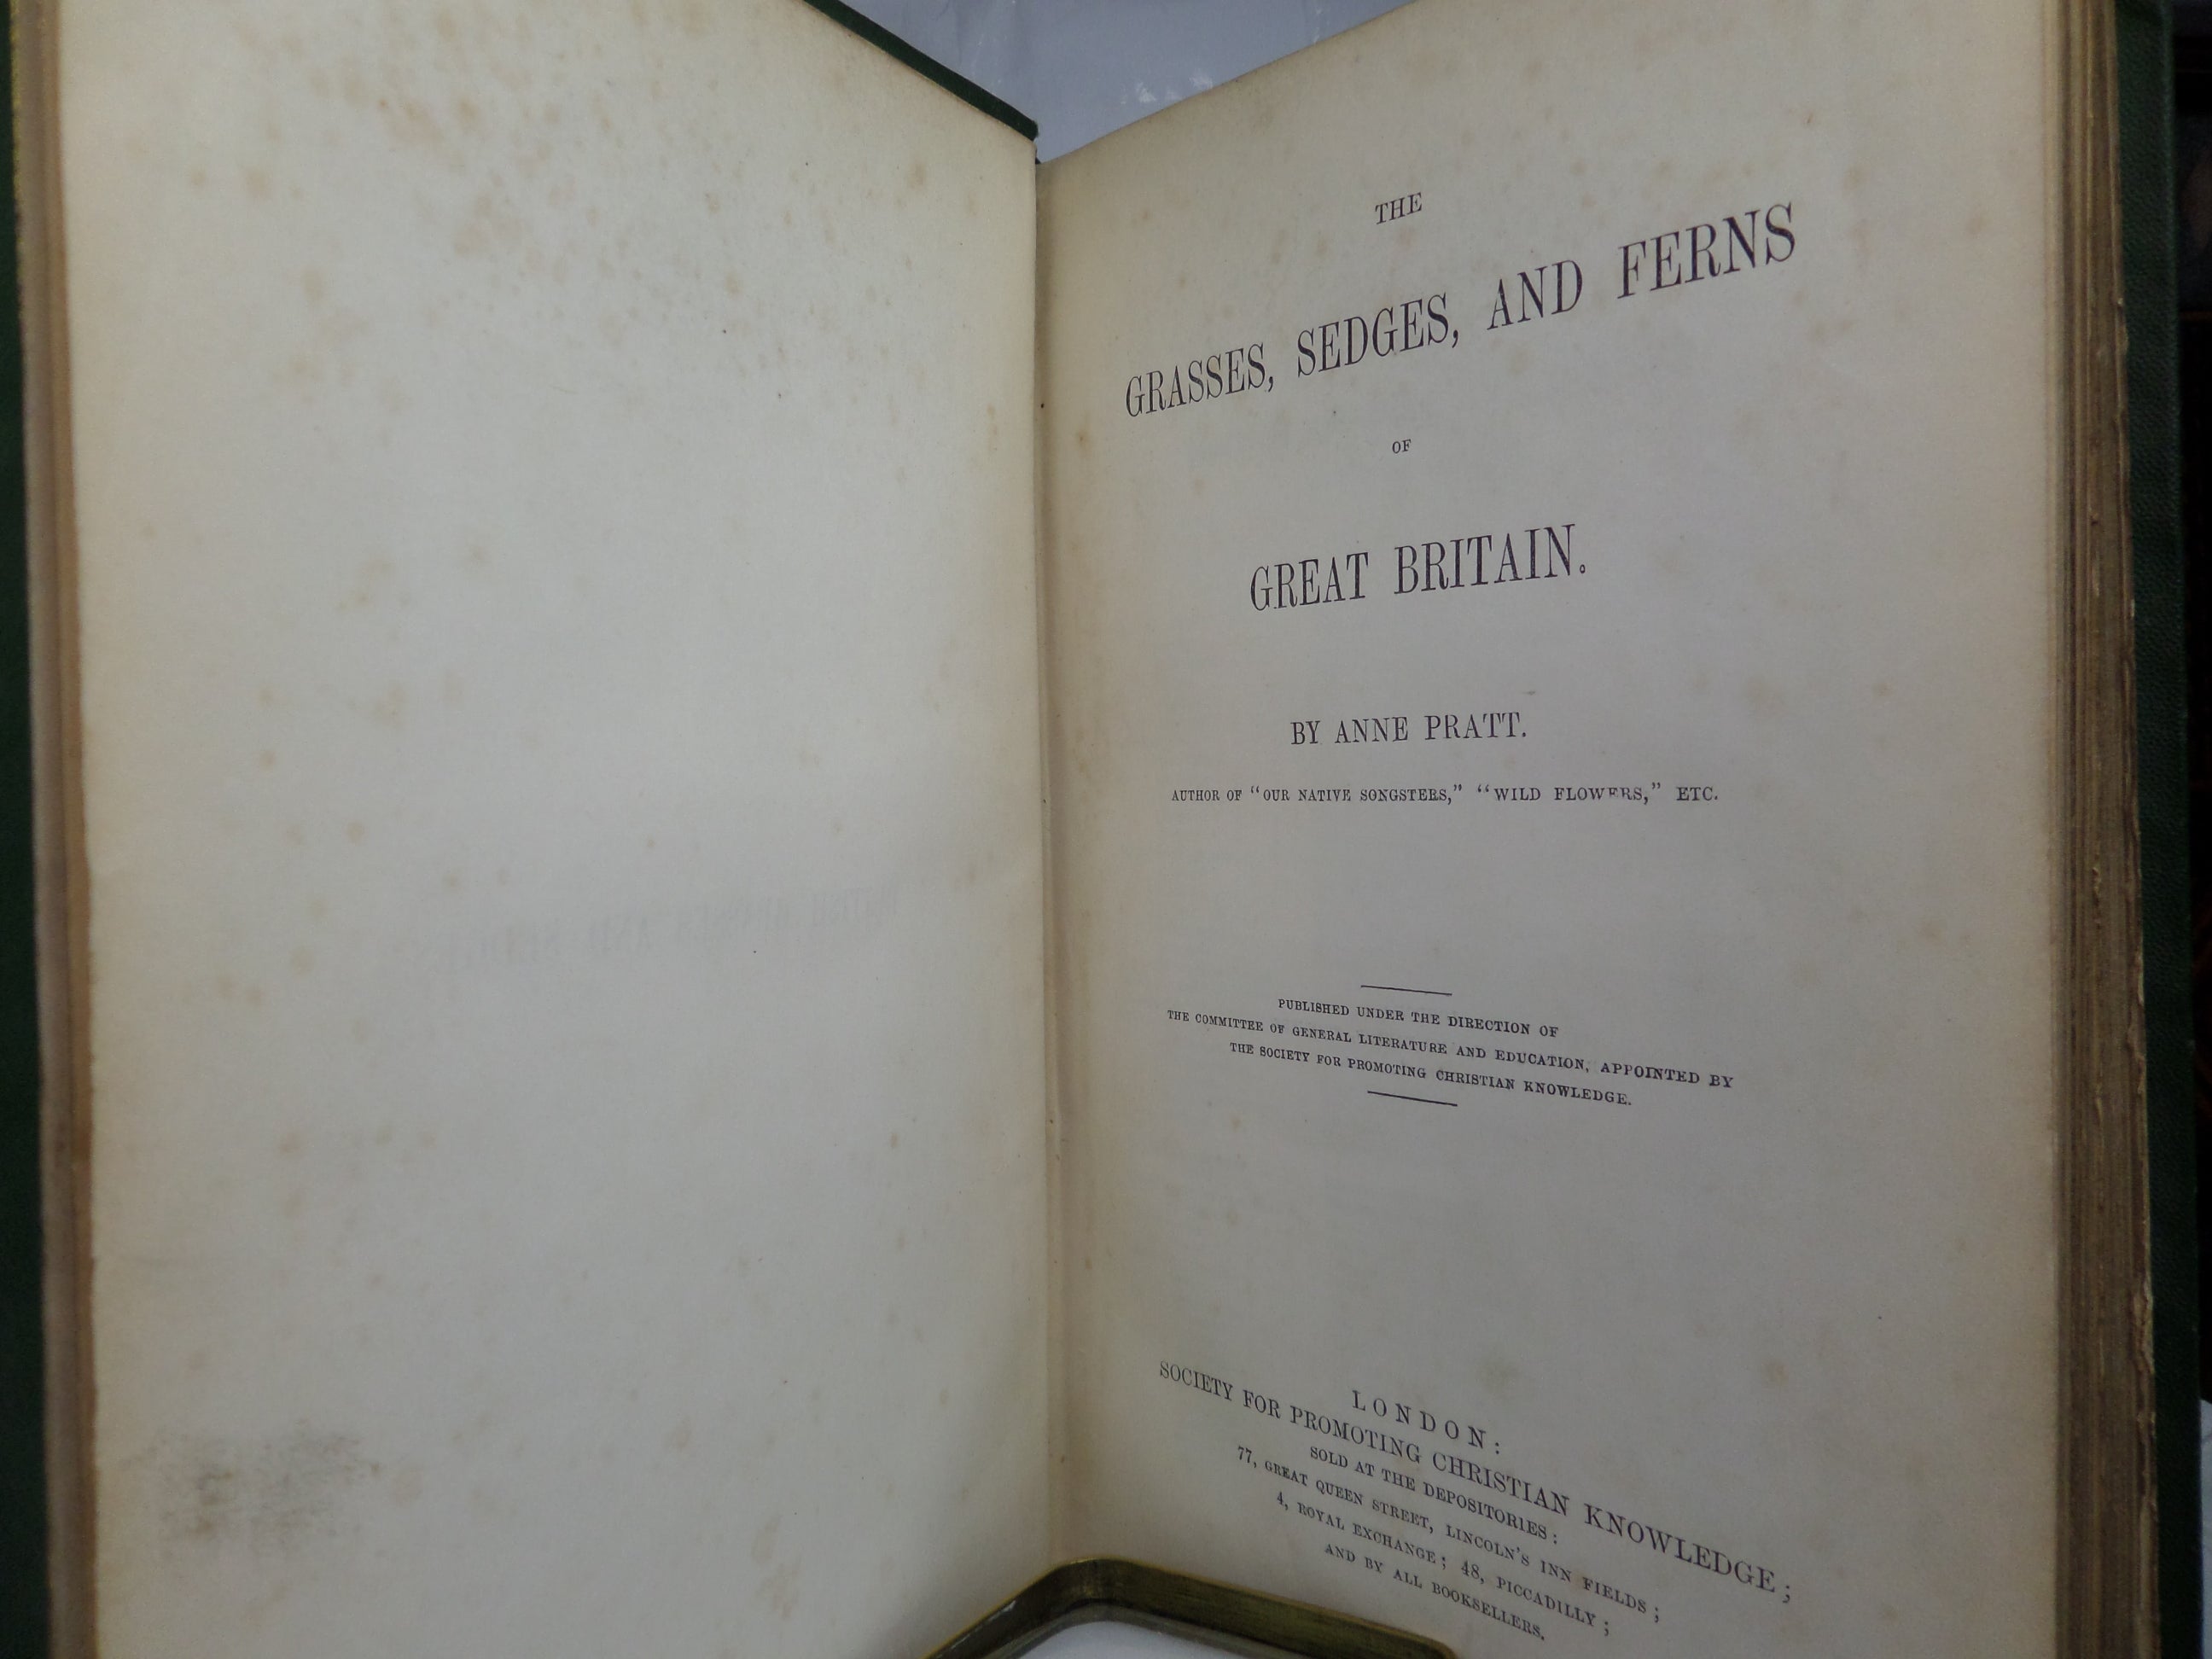 THE GRASSES, SEDGES & FERNS OF GREAT BRITAIN BY ANNE PRATT CIRCA 1860